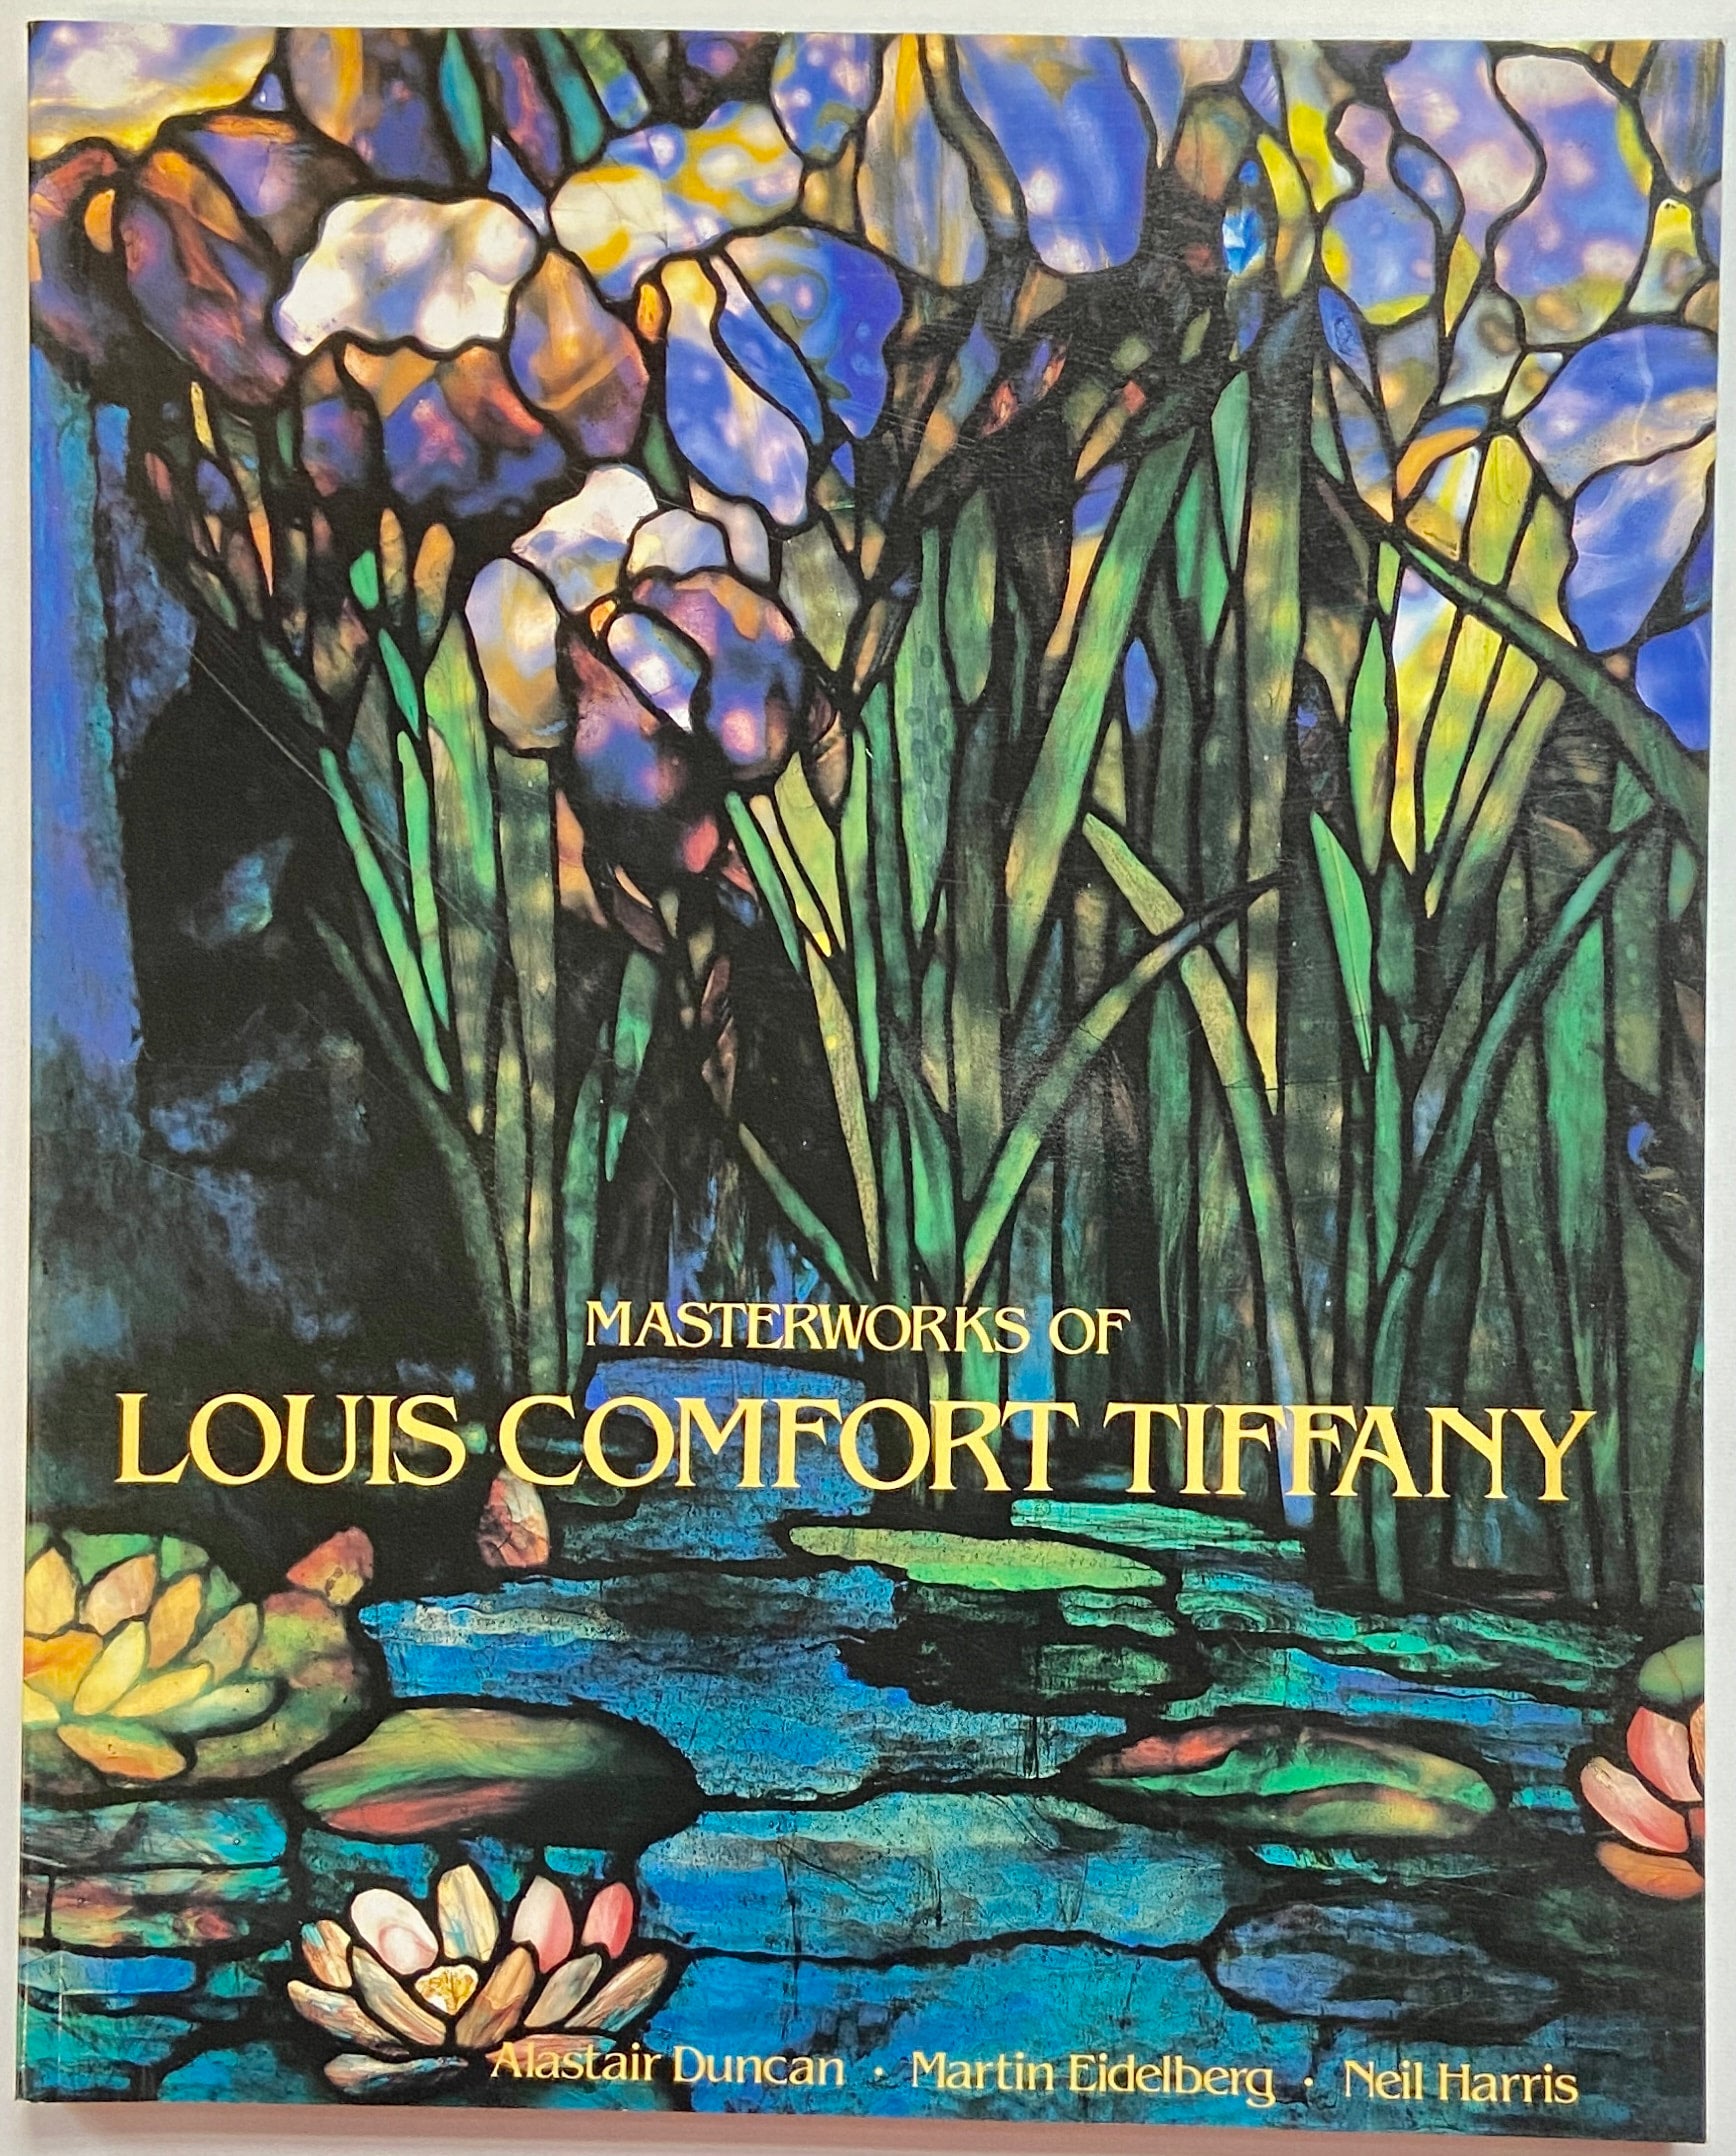 Masterworks of Louis Comfort Tiffany by Duncan, Alastair; Eidelberg,  Martin; Harris, Neil